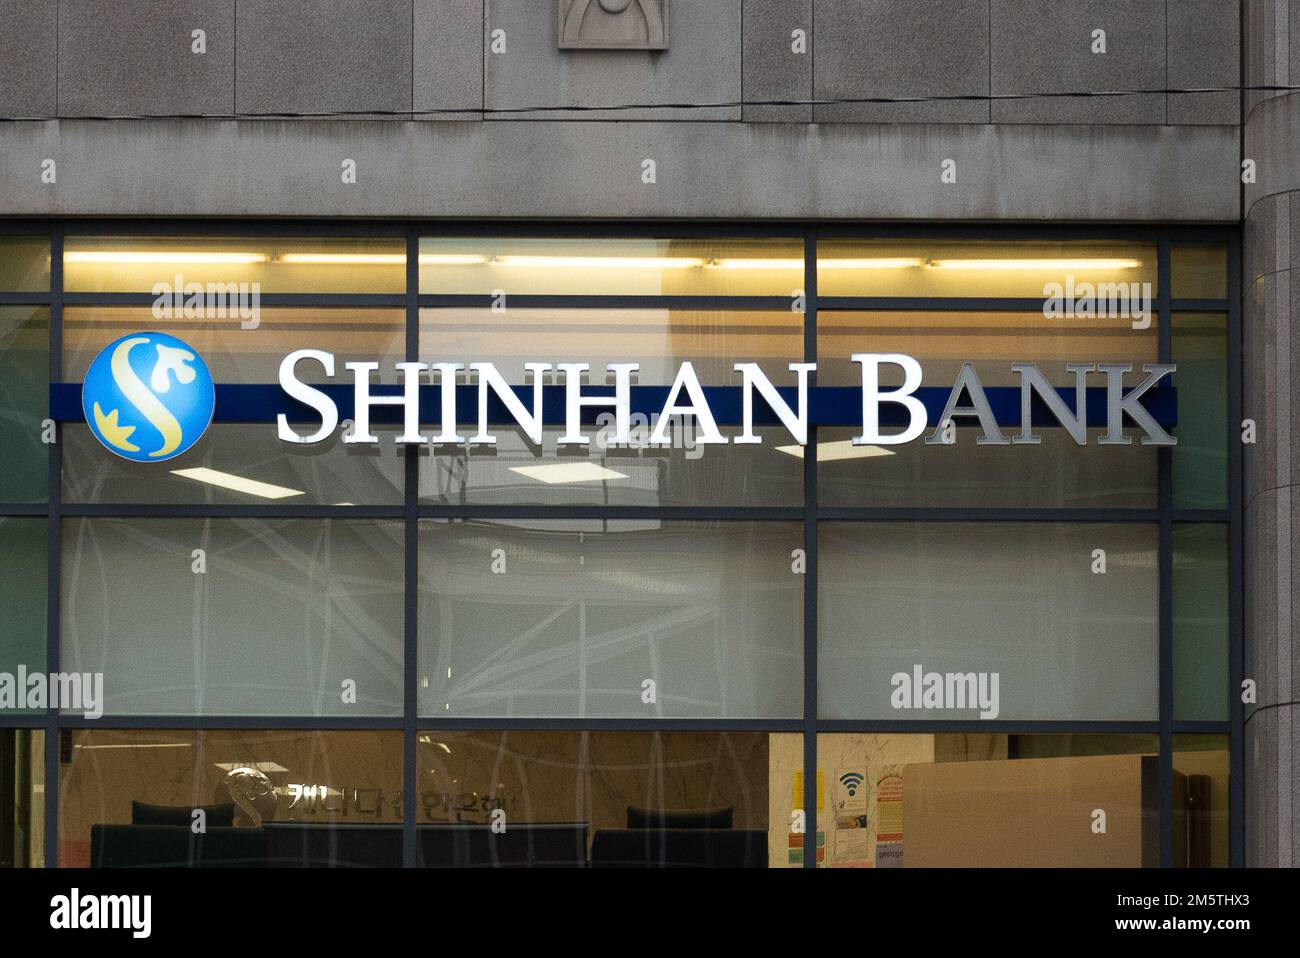 Shinhan Bank Brand Value & Company Profile